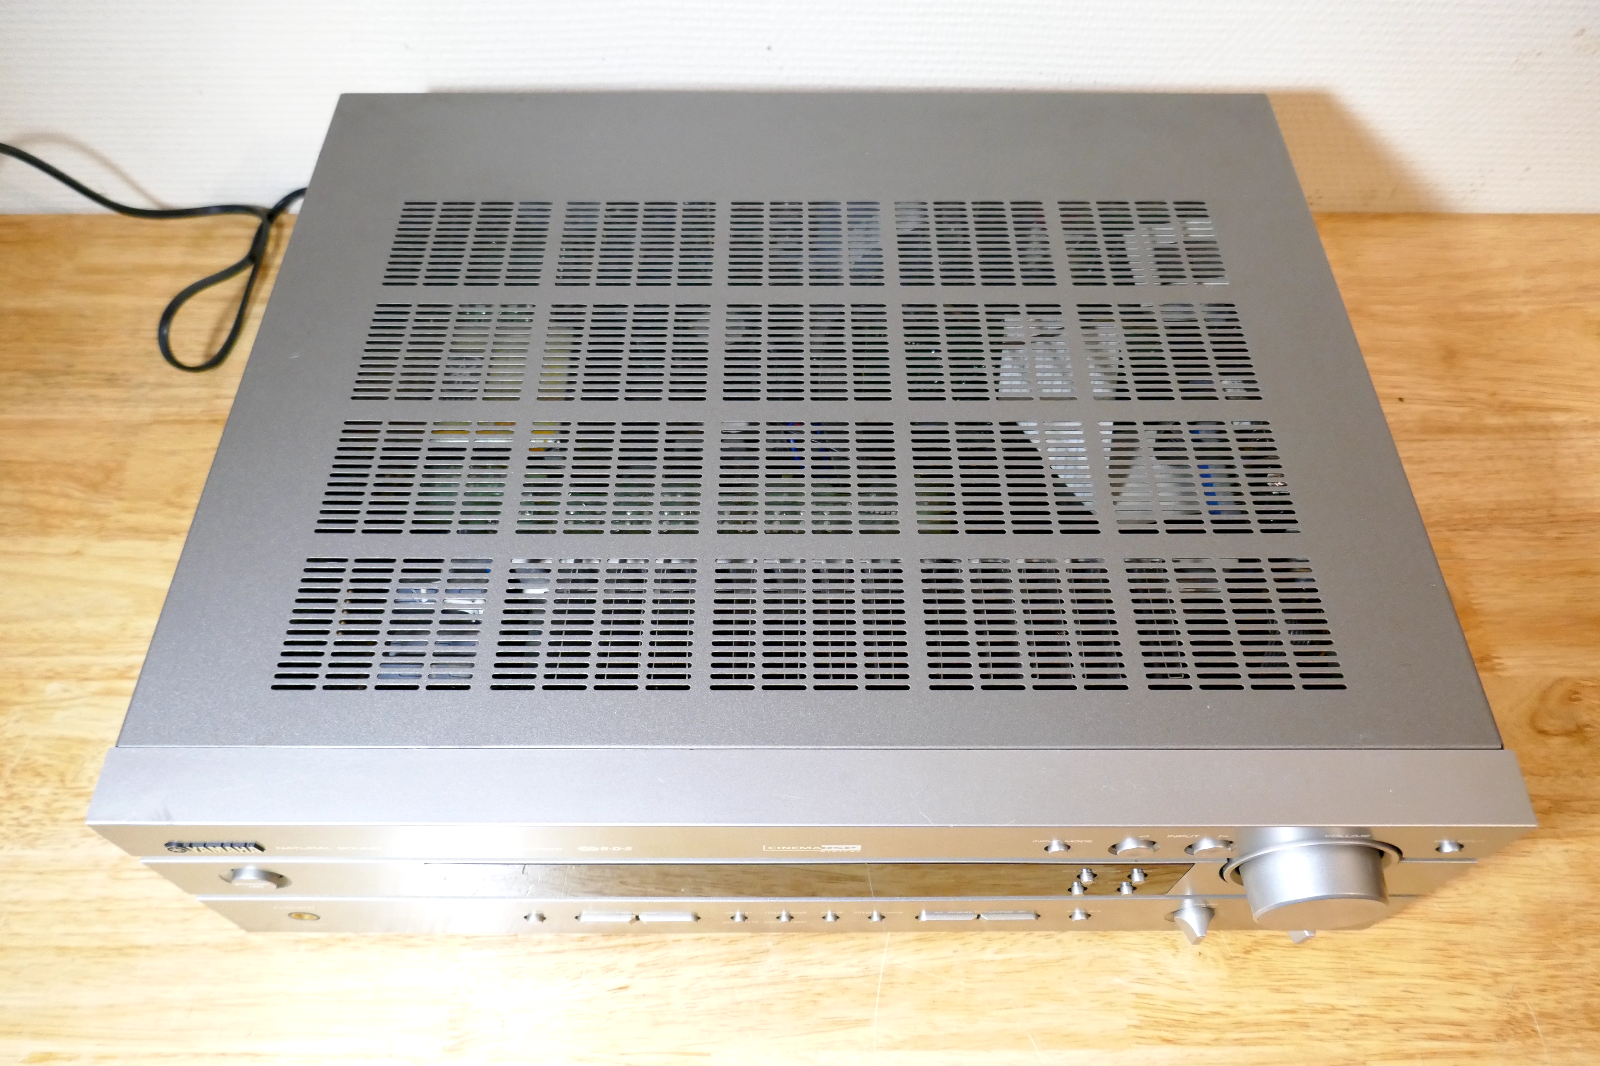 amplificateur amplifier yamaha RX-V430RDS vintage occasion